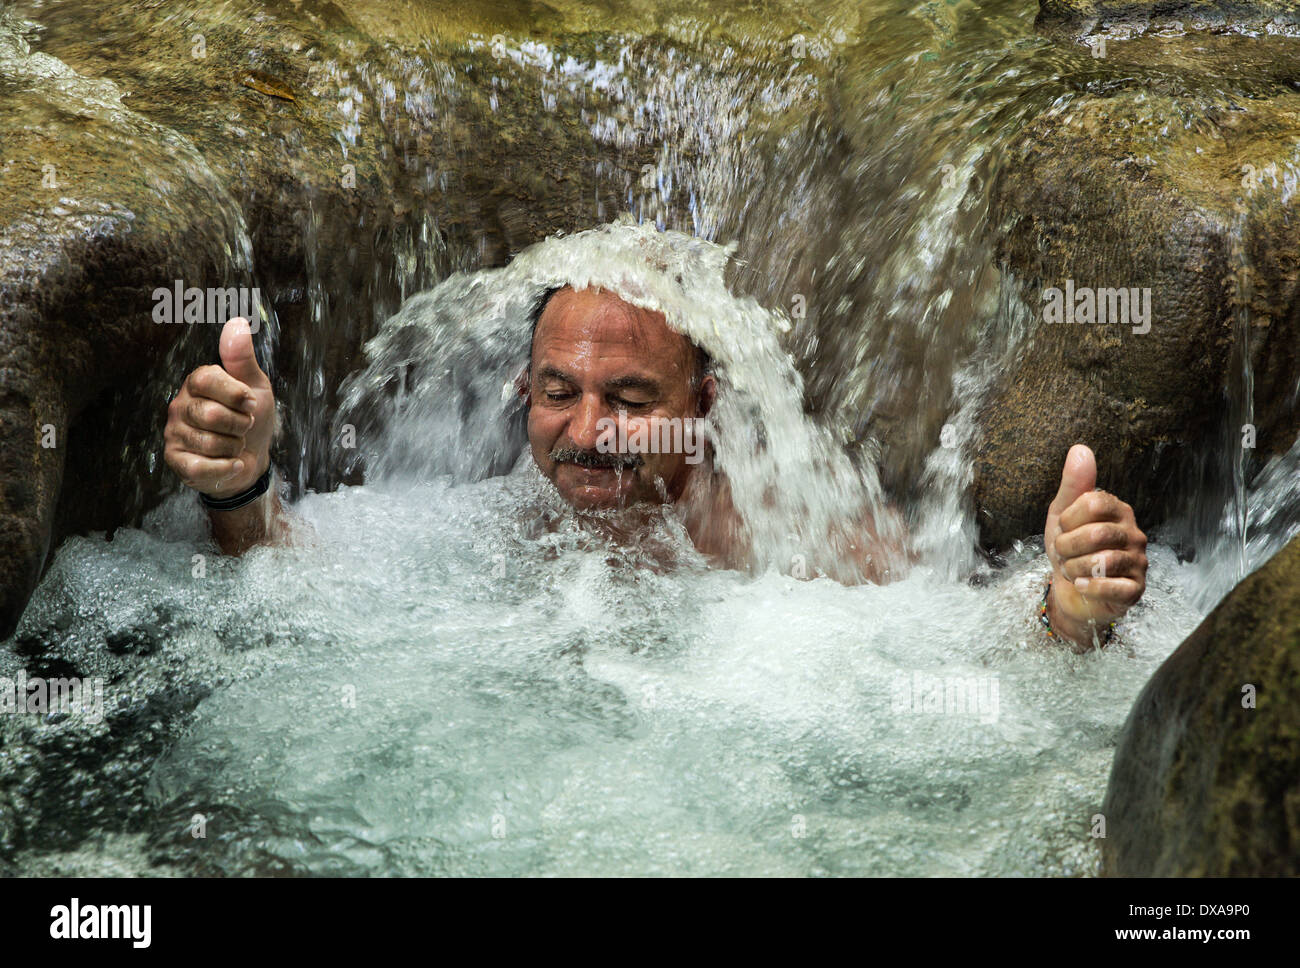 Man enjoys a refreshing water massage at Mayfield Falls, Glenbrook, Jamaica Stock Photo